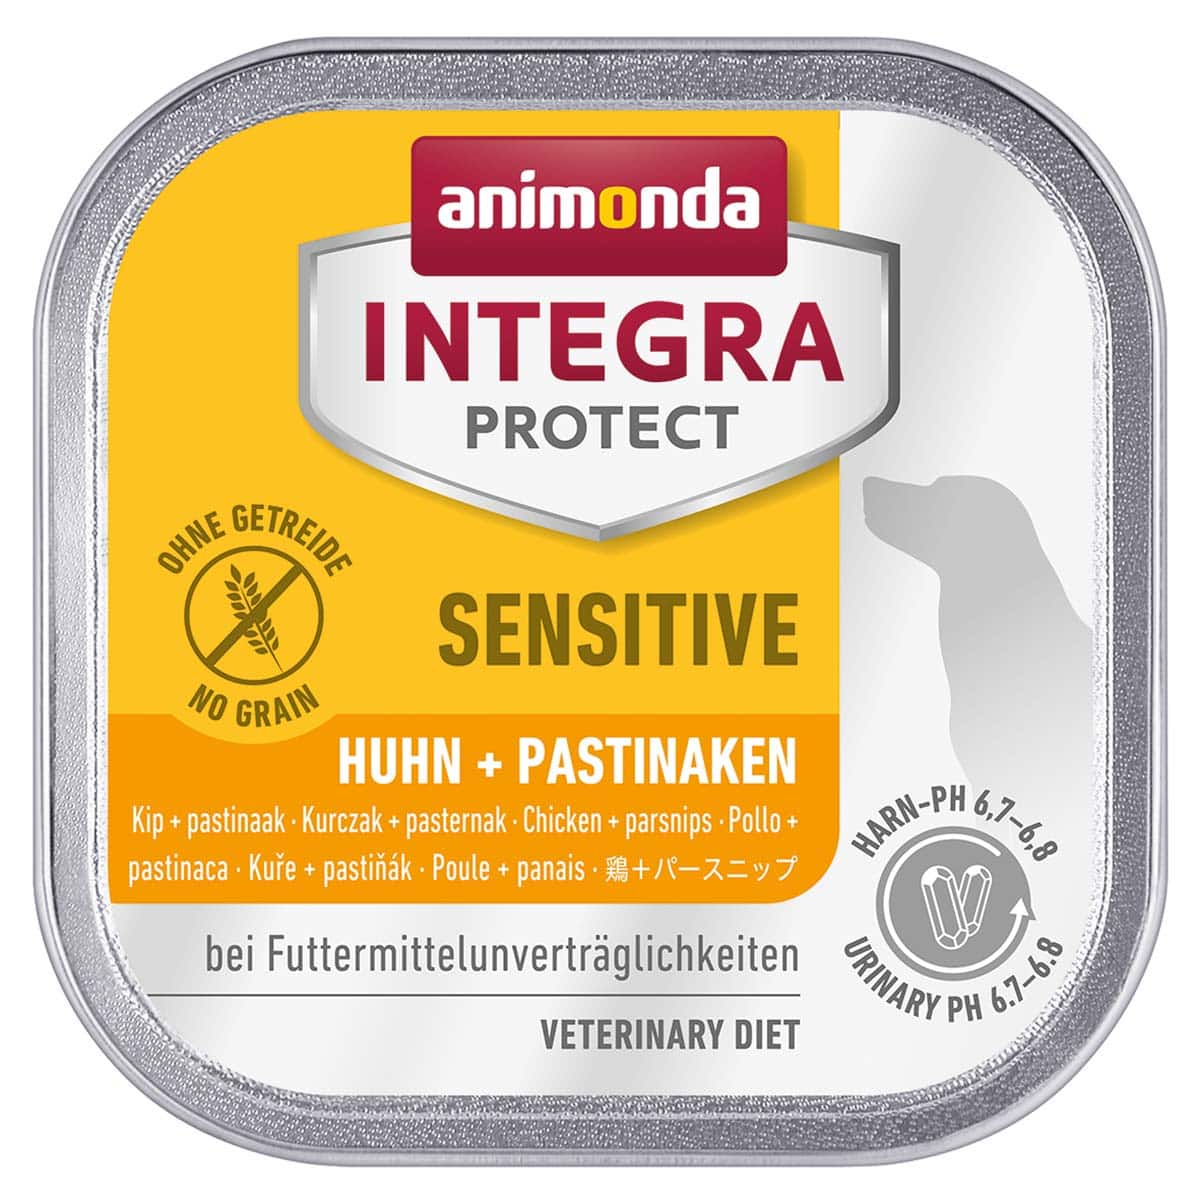 animonda Integra Protect Sensitive Huhn und Pastinaken 22x150g